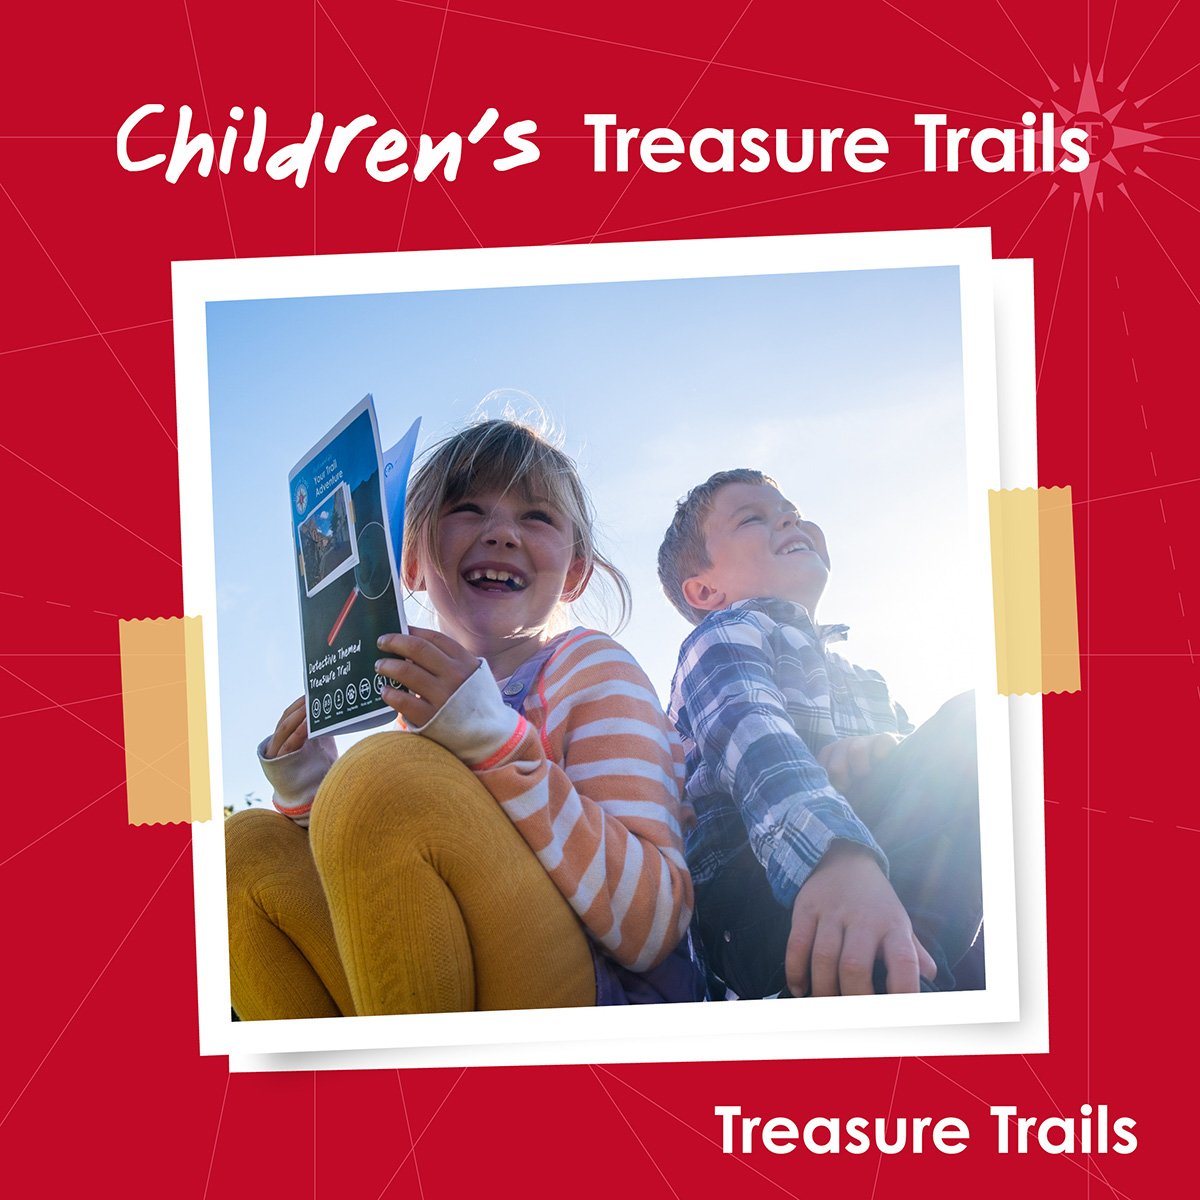 Children's Treasure Trails